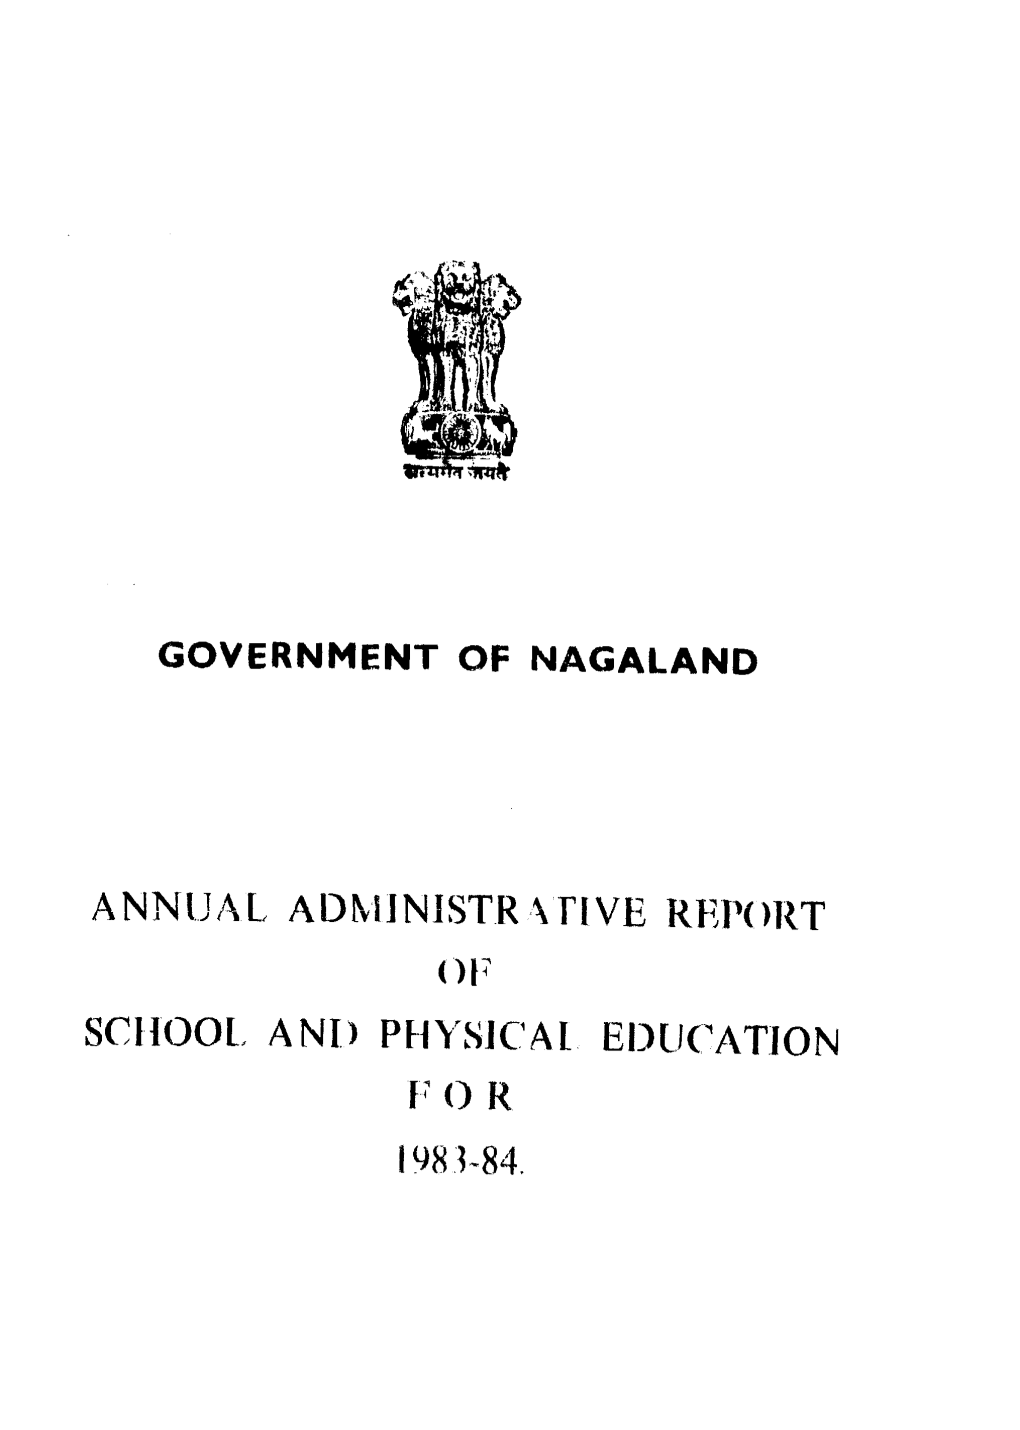 Government of Nagaland Annual Administratjve